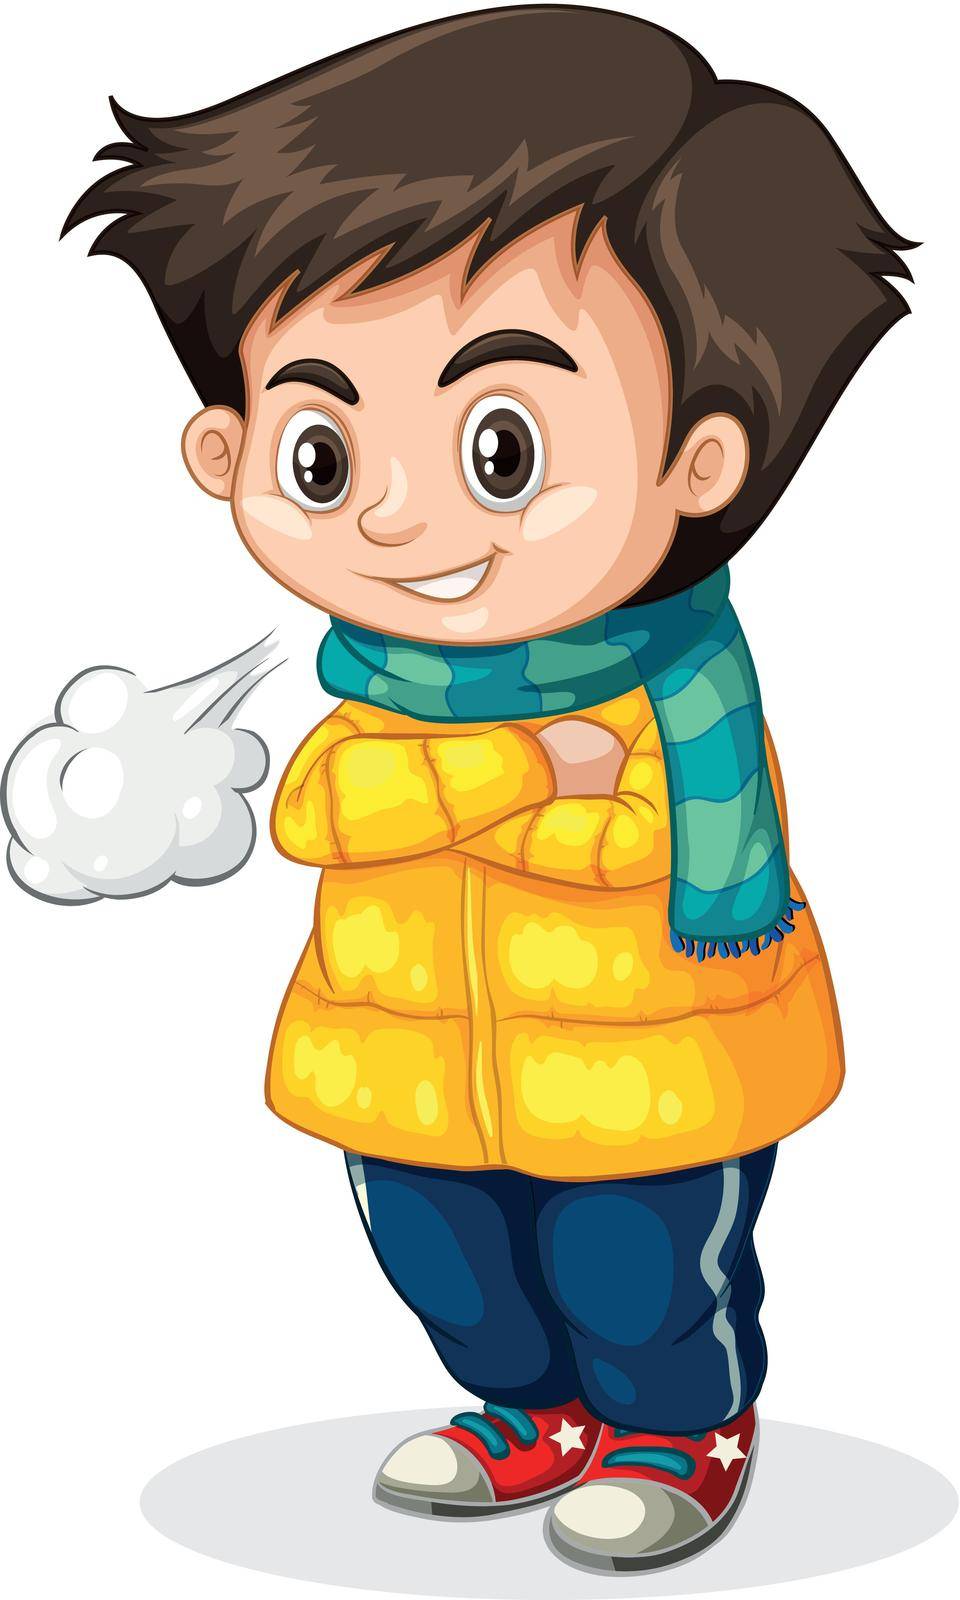 Cold kid white background illustration